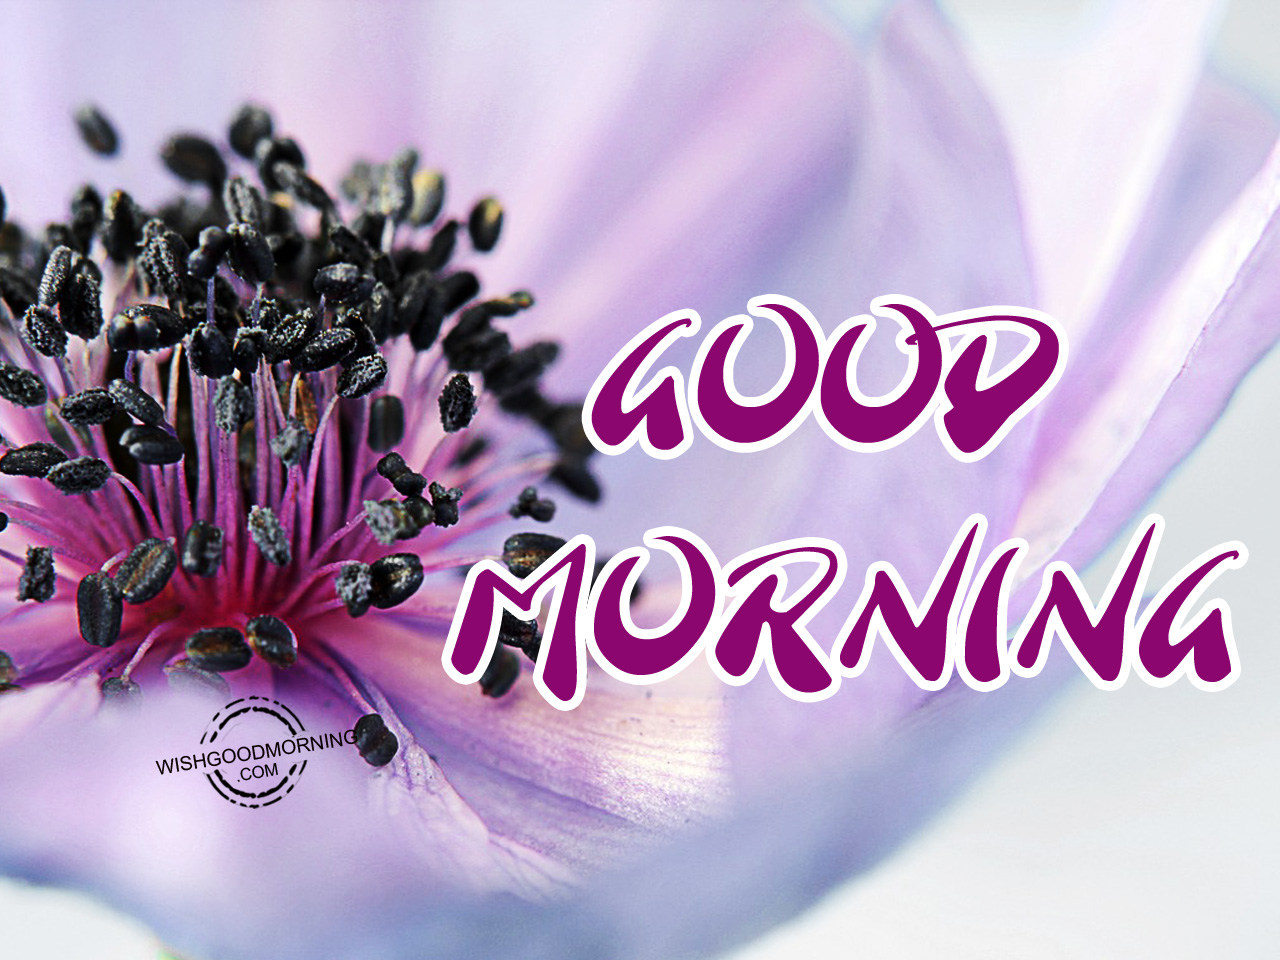 Good Morning Image - Good Morning Pictures – WishGoodMorning.com